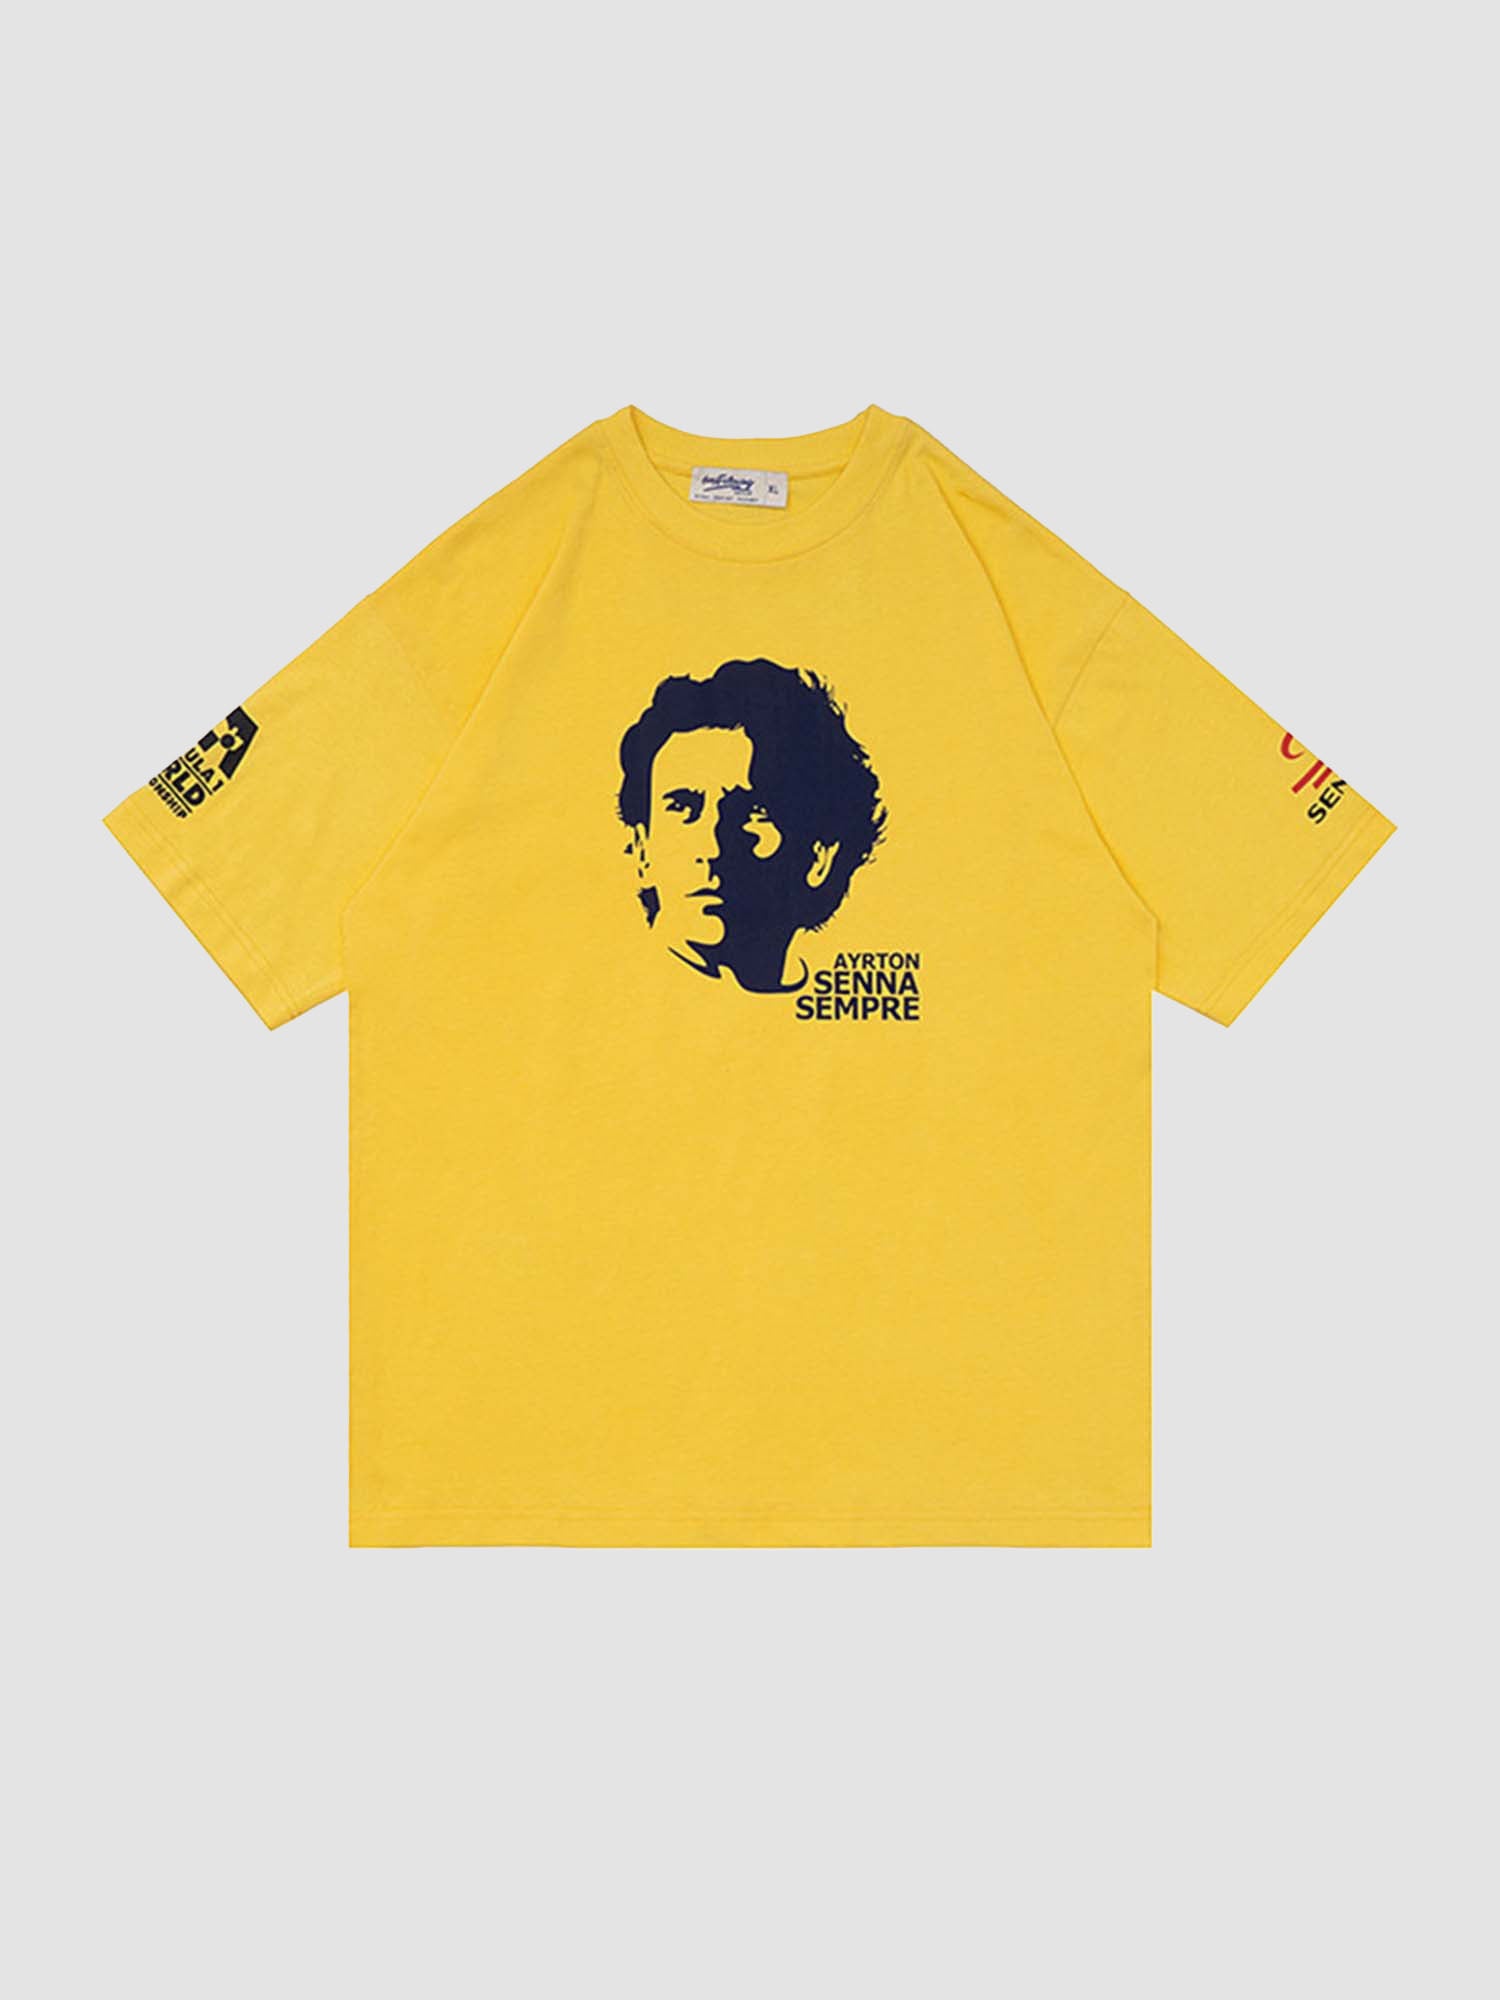 JUSTNOTAG Tribute to the Senna Racer Figure Print Cotton Short Sleeve Tee